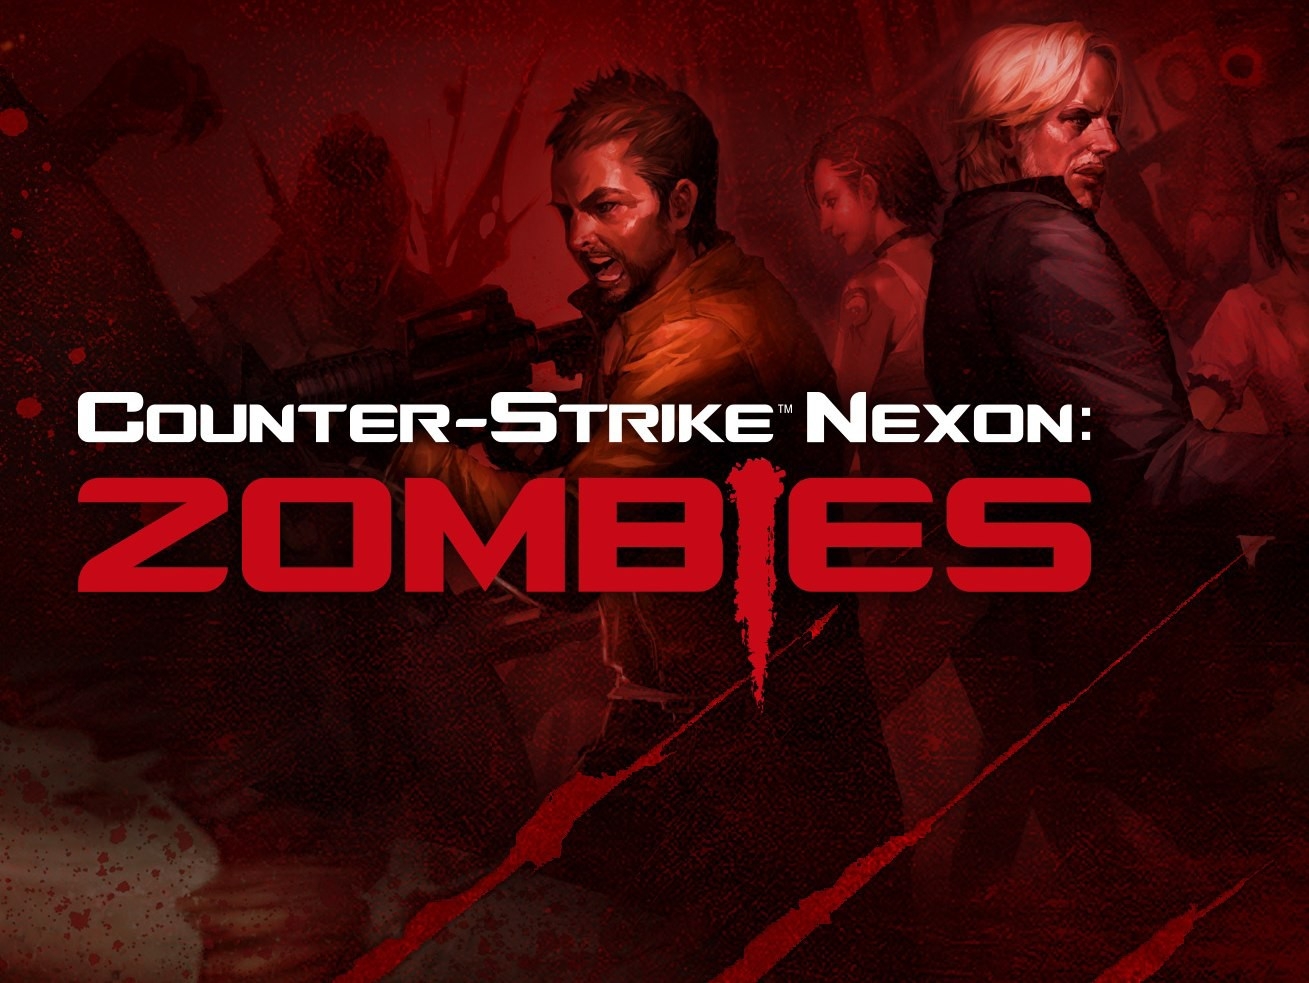 Обложка игры Сounter-Strike Nexon: Zombies